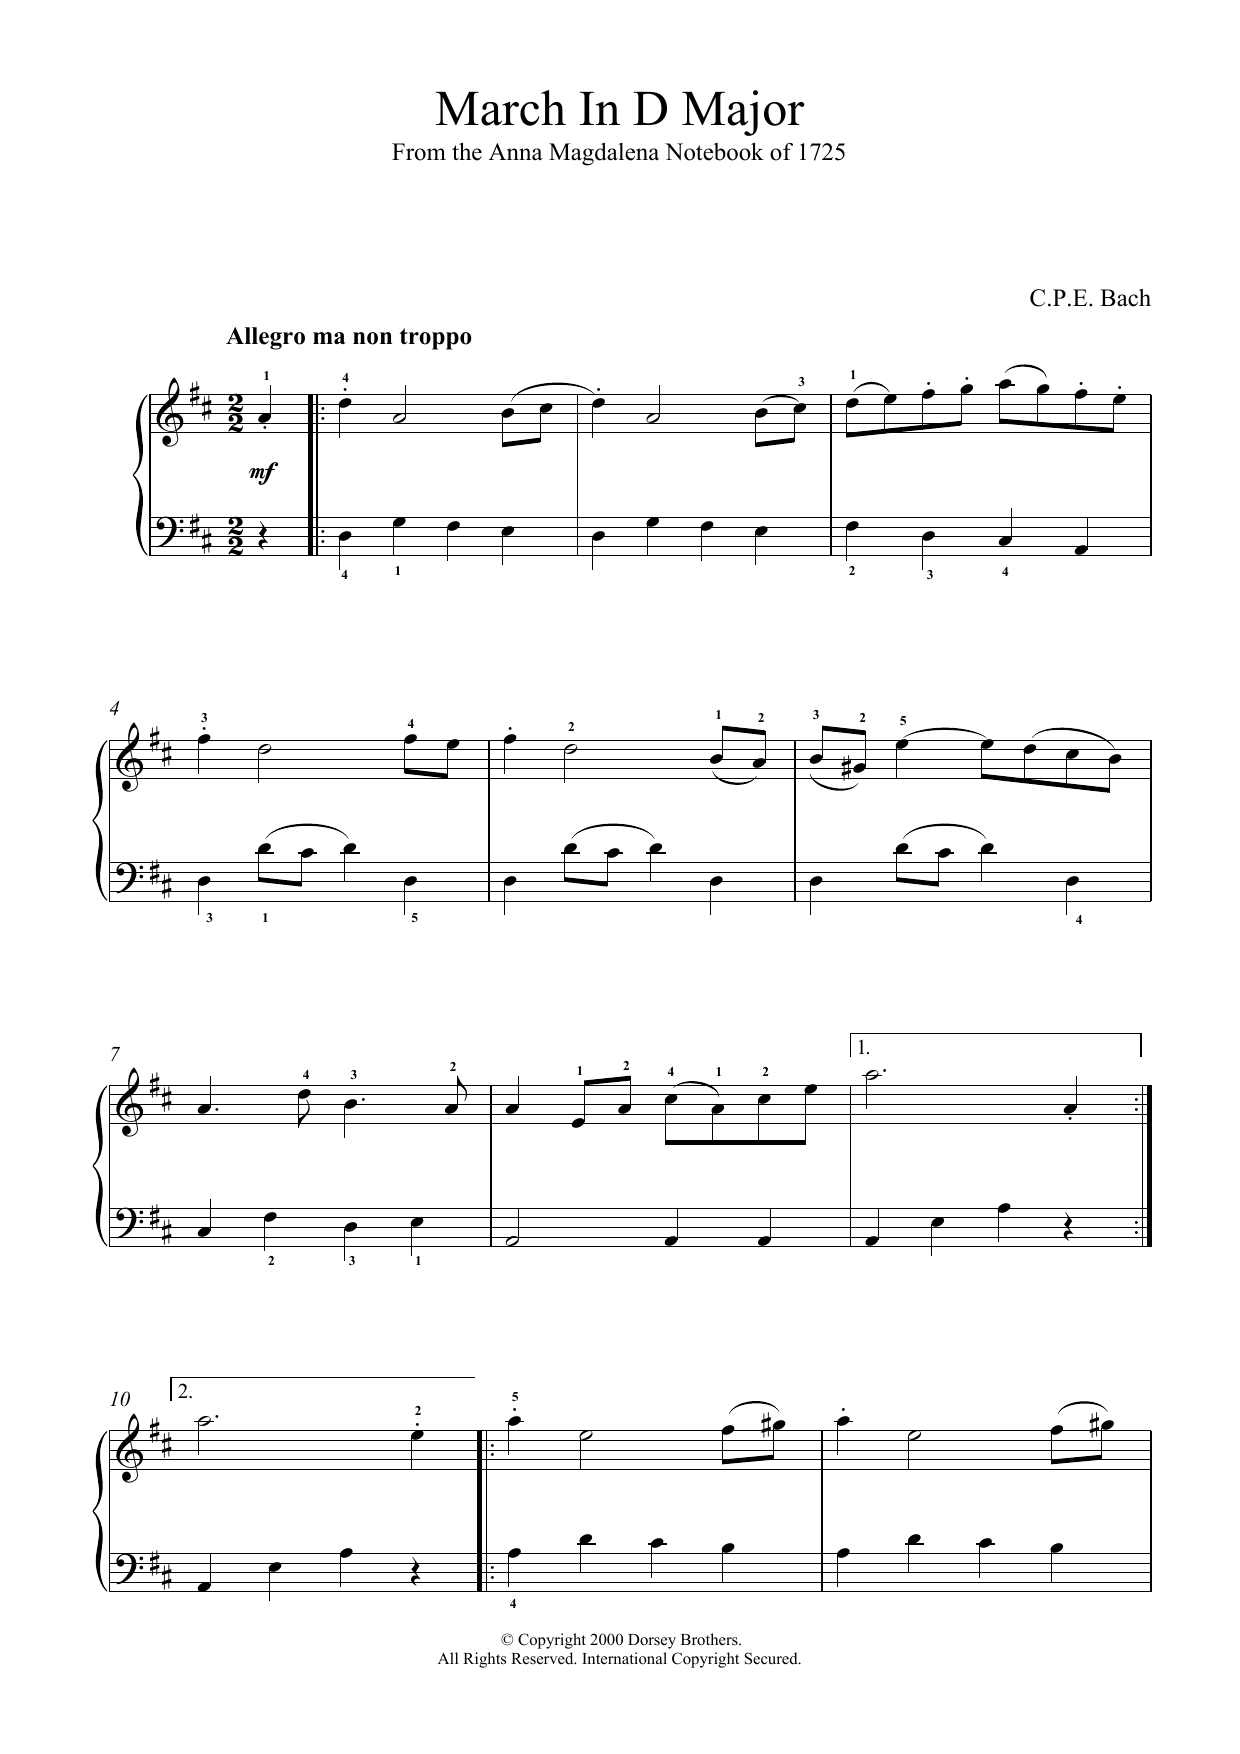 Carl Philipp Emanuel Bach March In D Major, BWV App. 122 sheet music notes printable PDF score